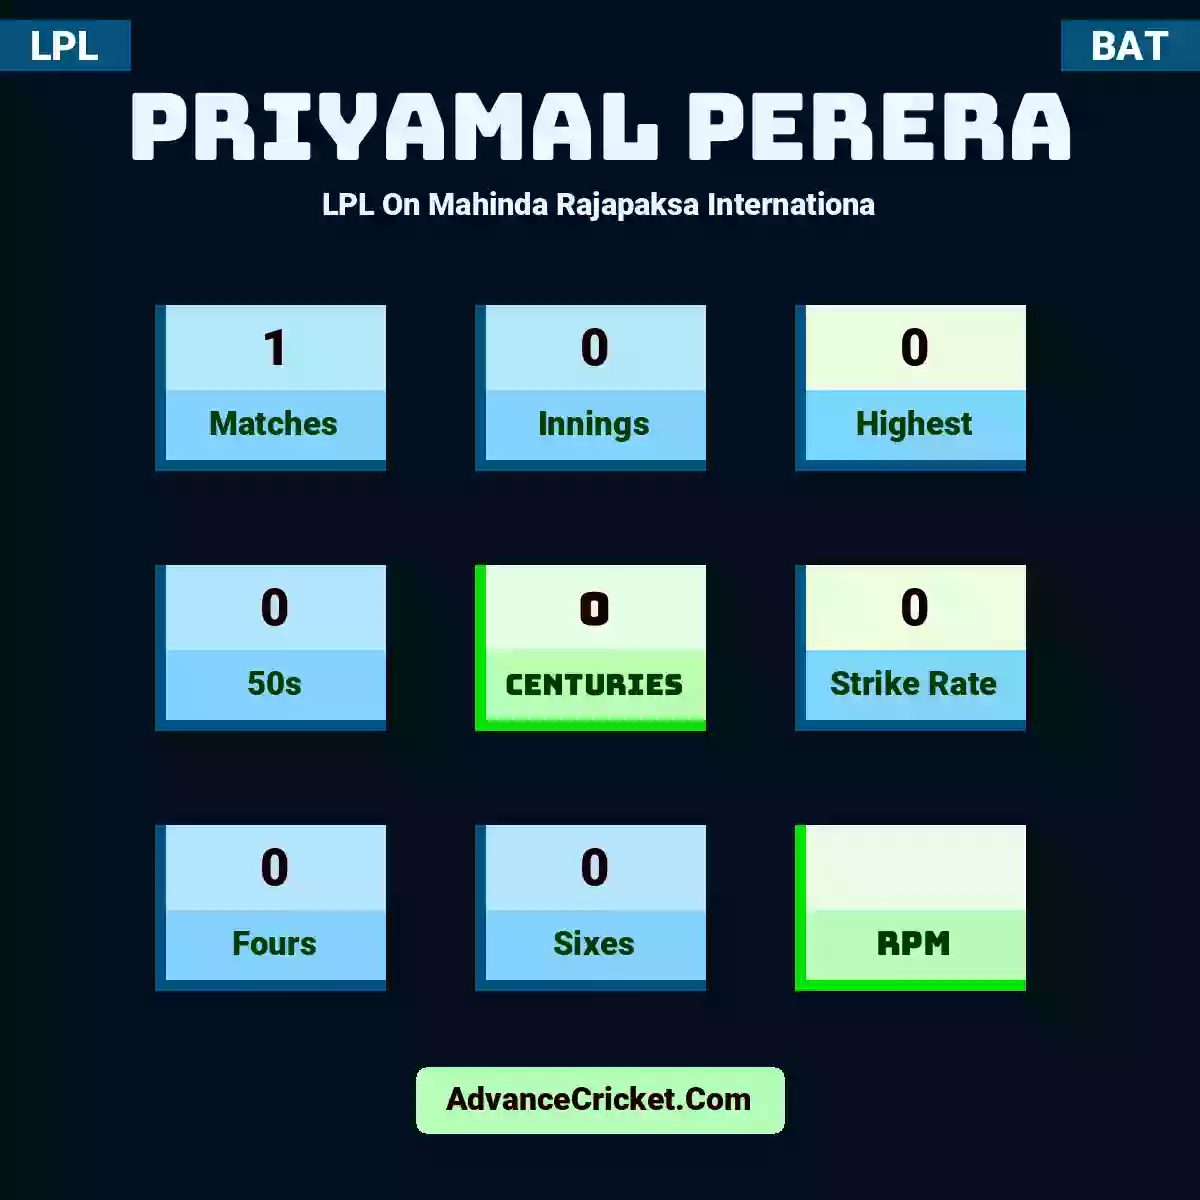 Priyamal Perera LPL  On Mahinda Rajapaksa Internationa, Priyamal Perera played 1 matches, scored 0 runs as highest, 0 half-centuries, and 0 centuries, with a strike rate of 0. P.Perera hit 0 fours and 0 sixes.